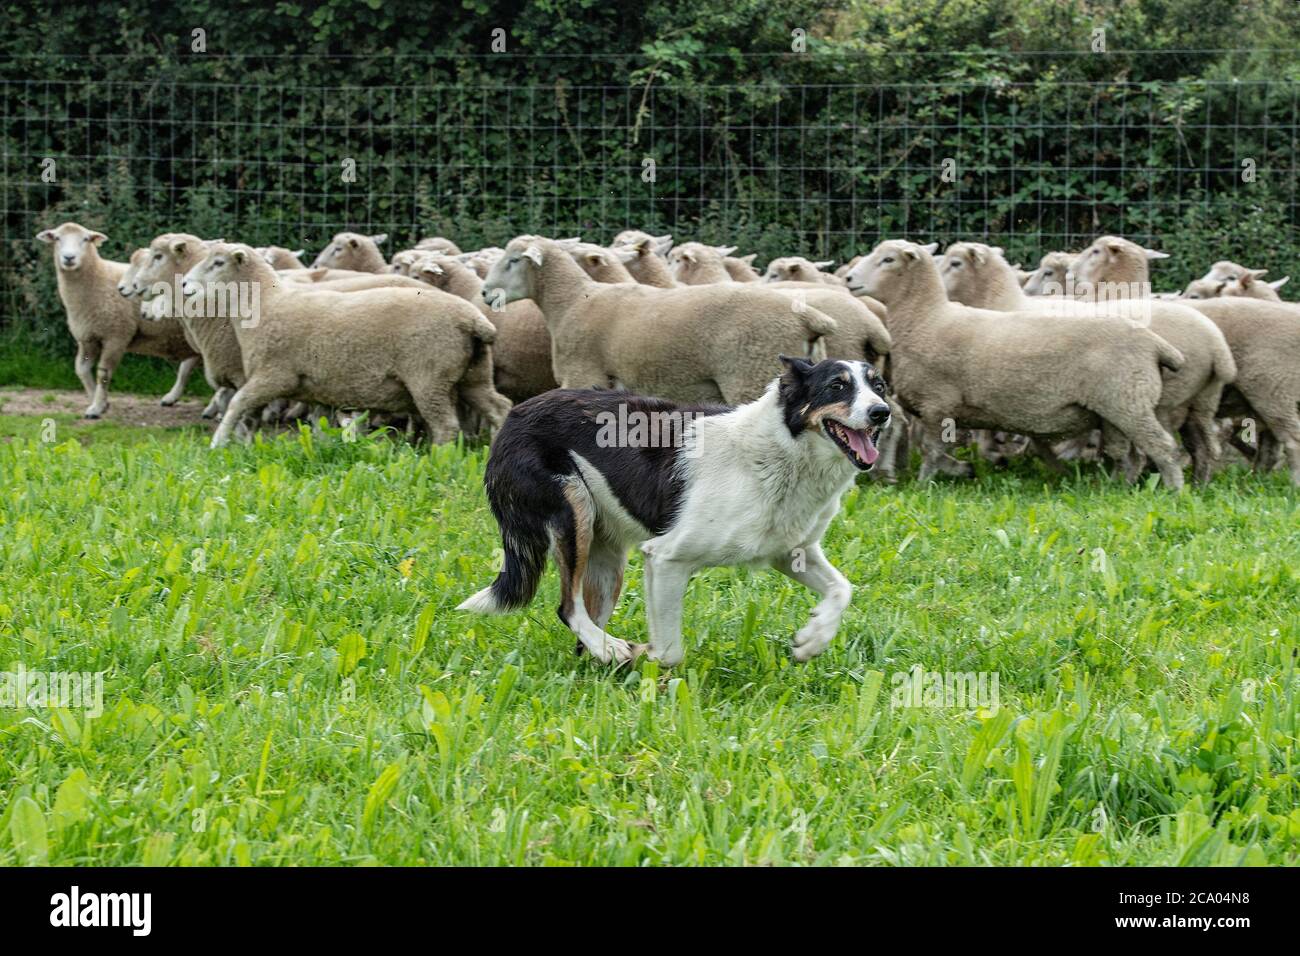 new Zealand huntaway x collie and sheep Stock Photo